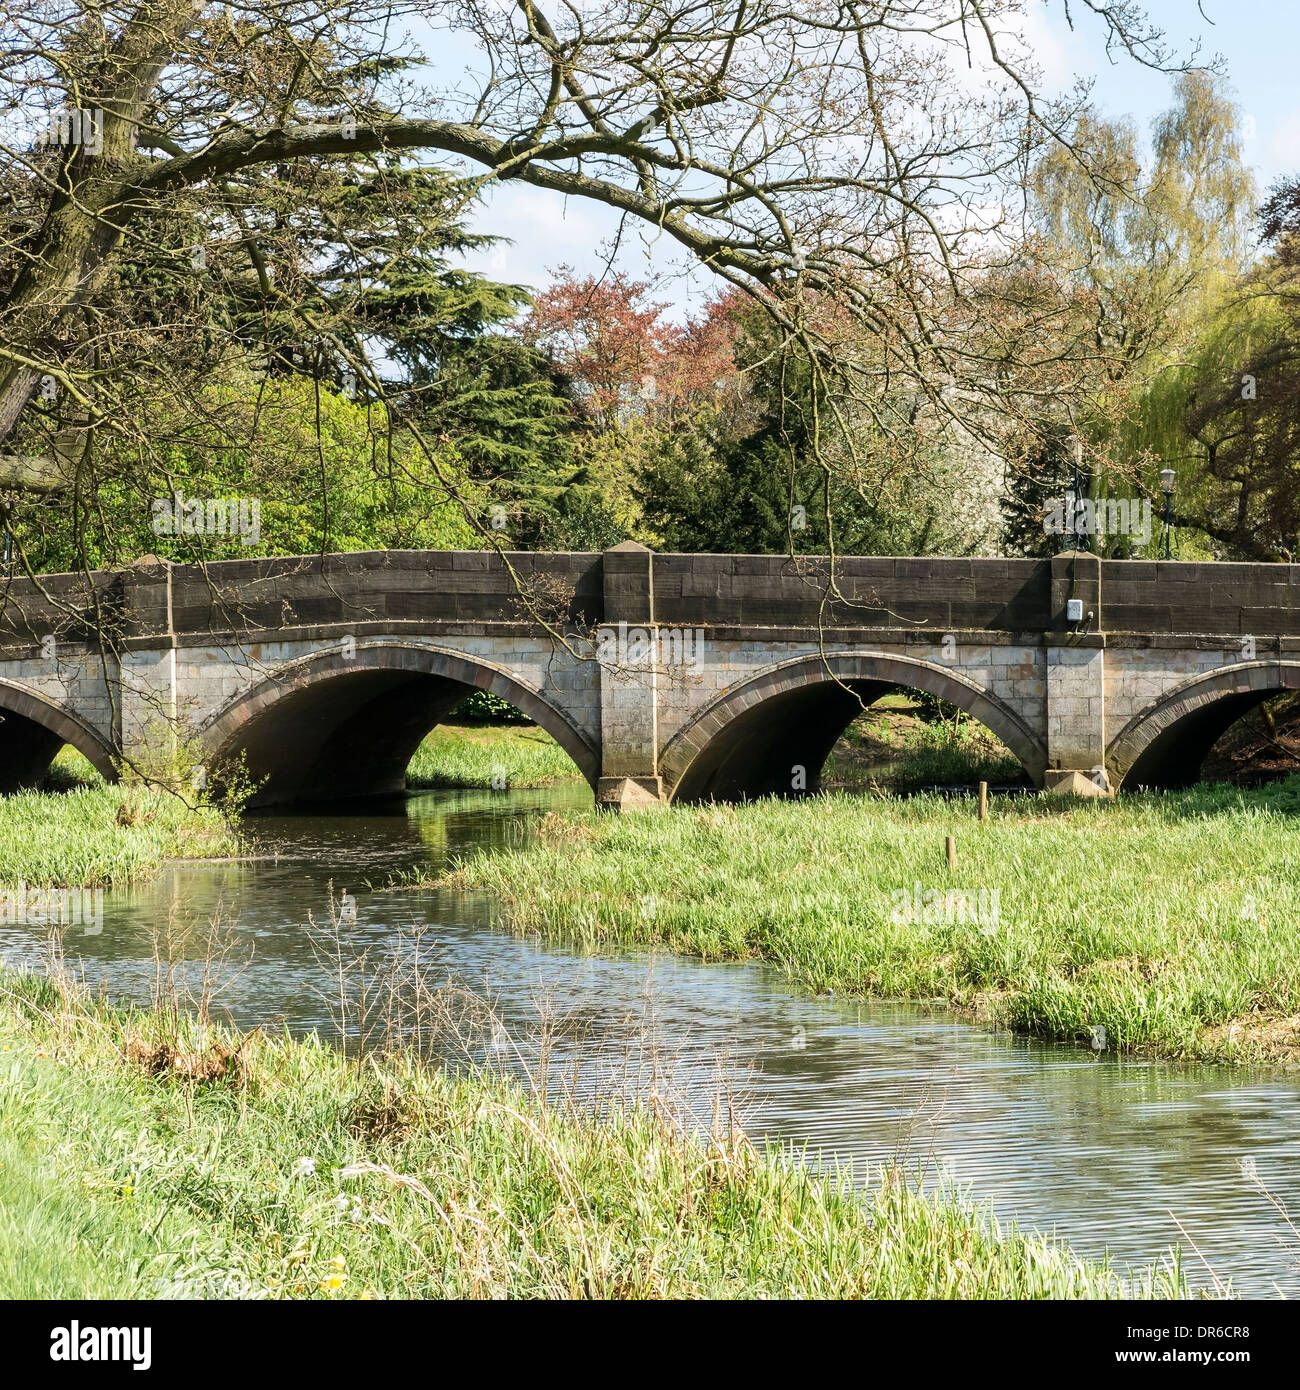 The stone arches of Lady Wilton Bridge over the River Eye, Melton Mowbray, Leicestershire, England, UK. Stock Photo